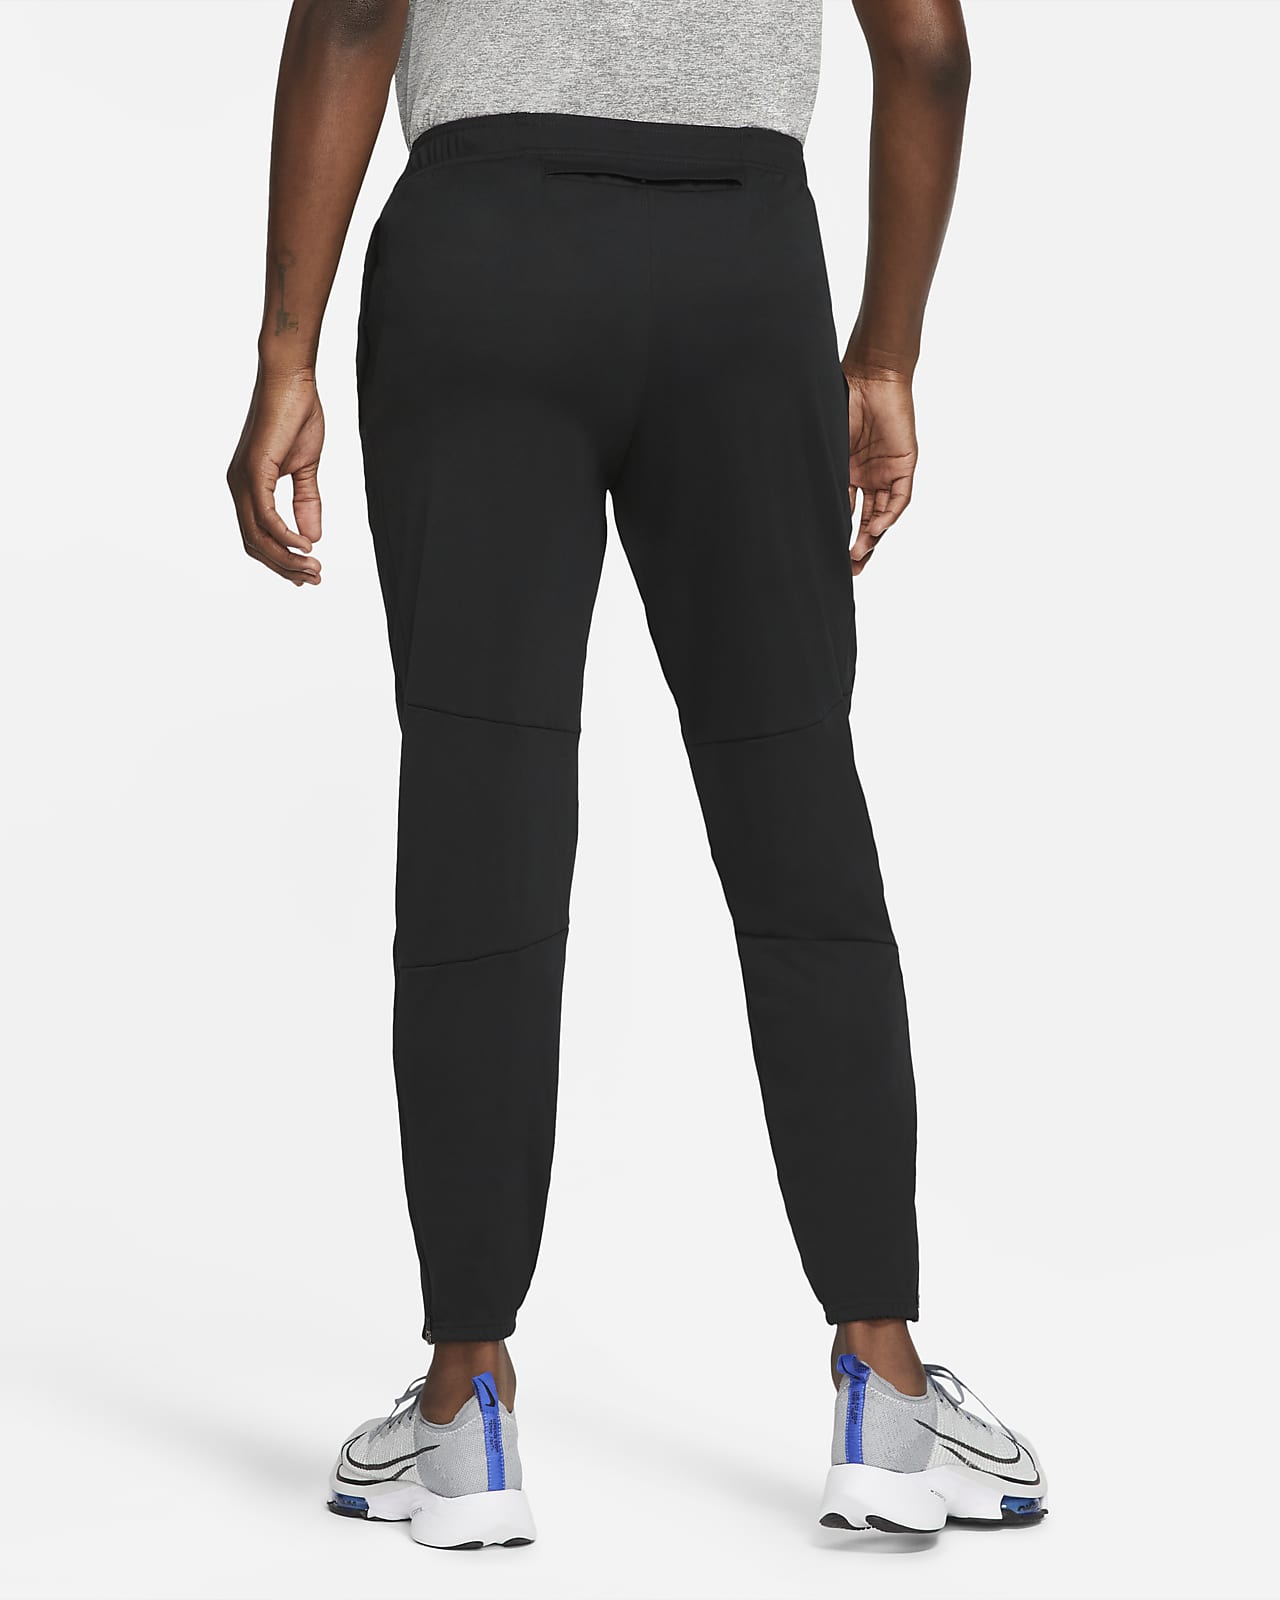 Nike Running Plus woven sweatpants in black | ASOS